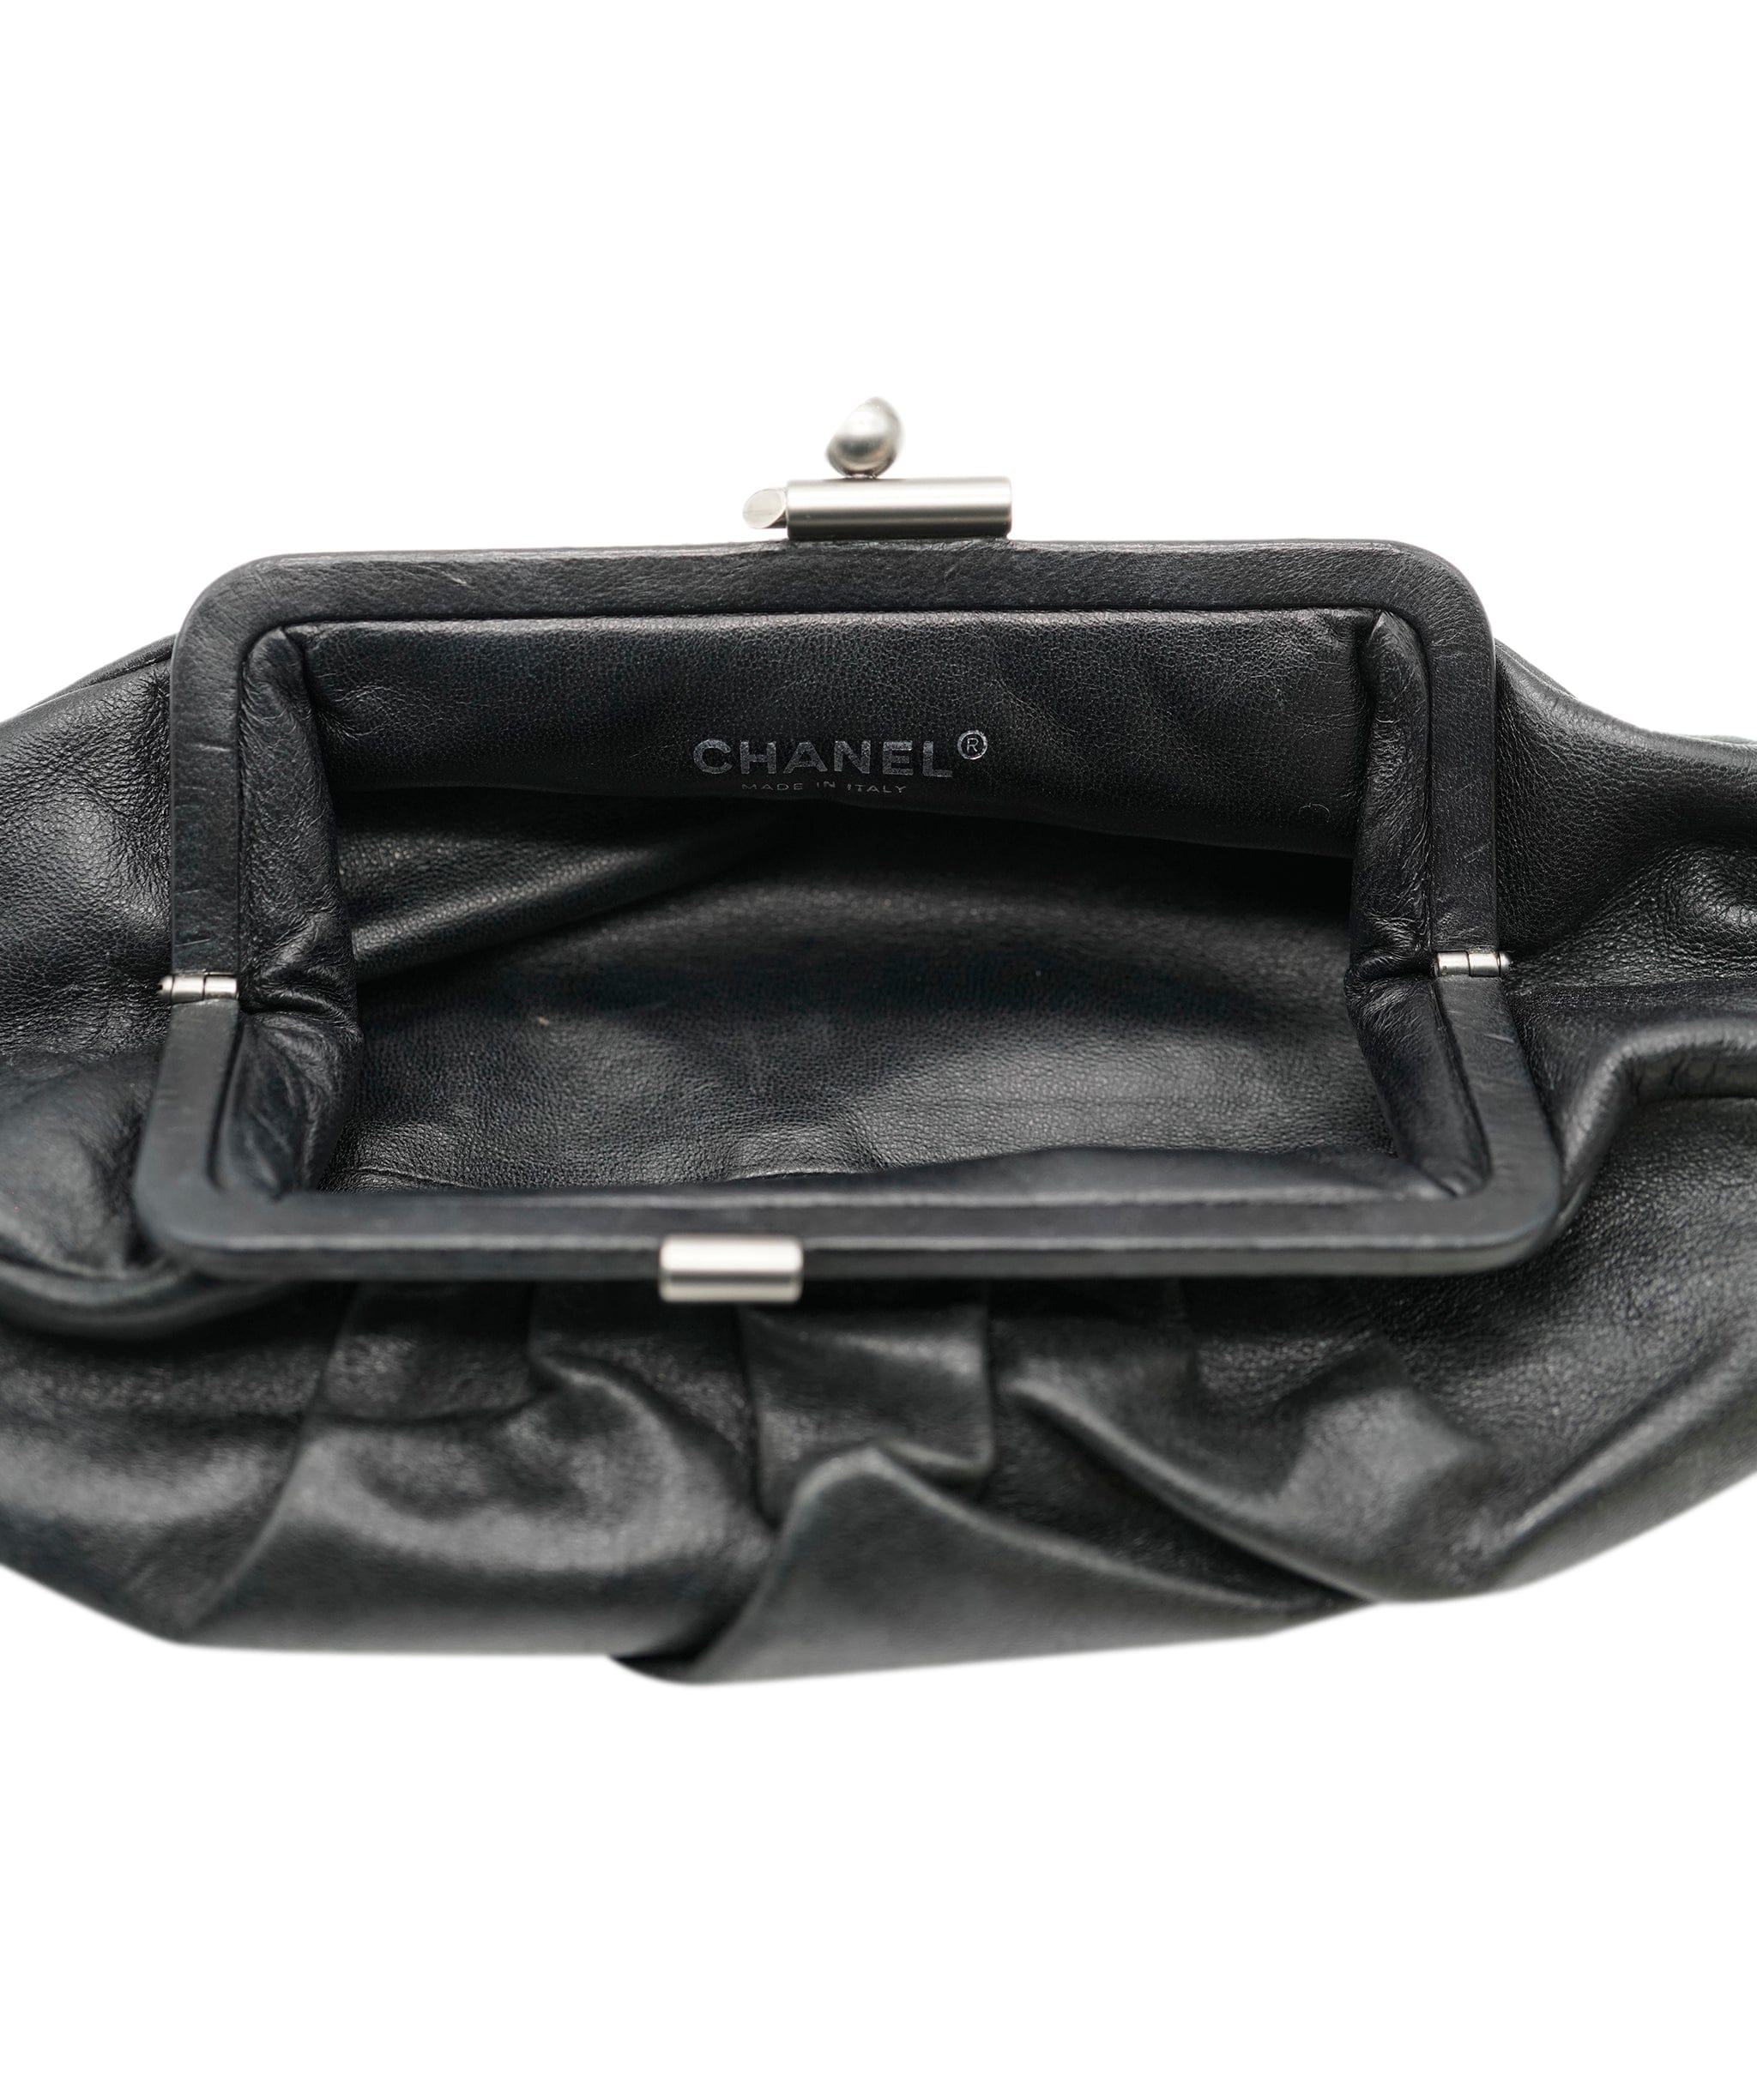 Chanel Chanel black clutch kisslock ALC0579